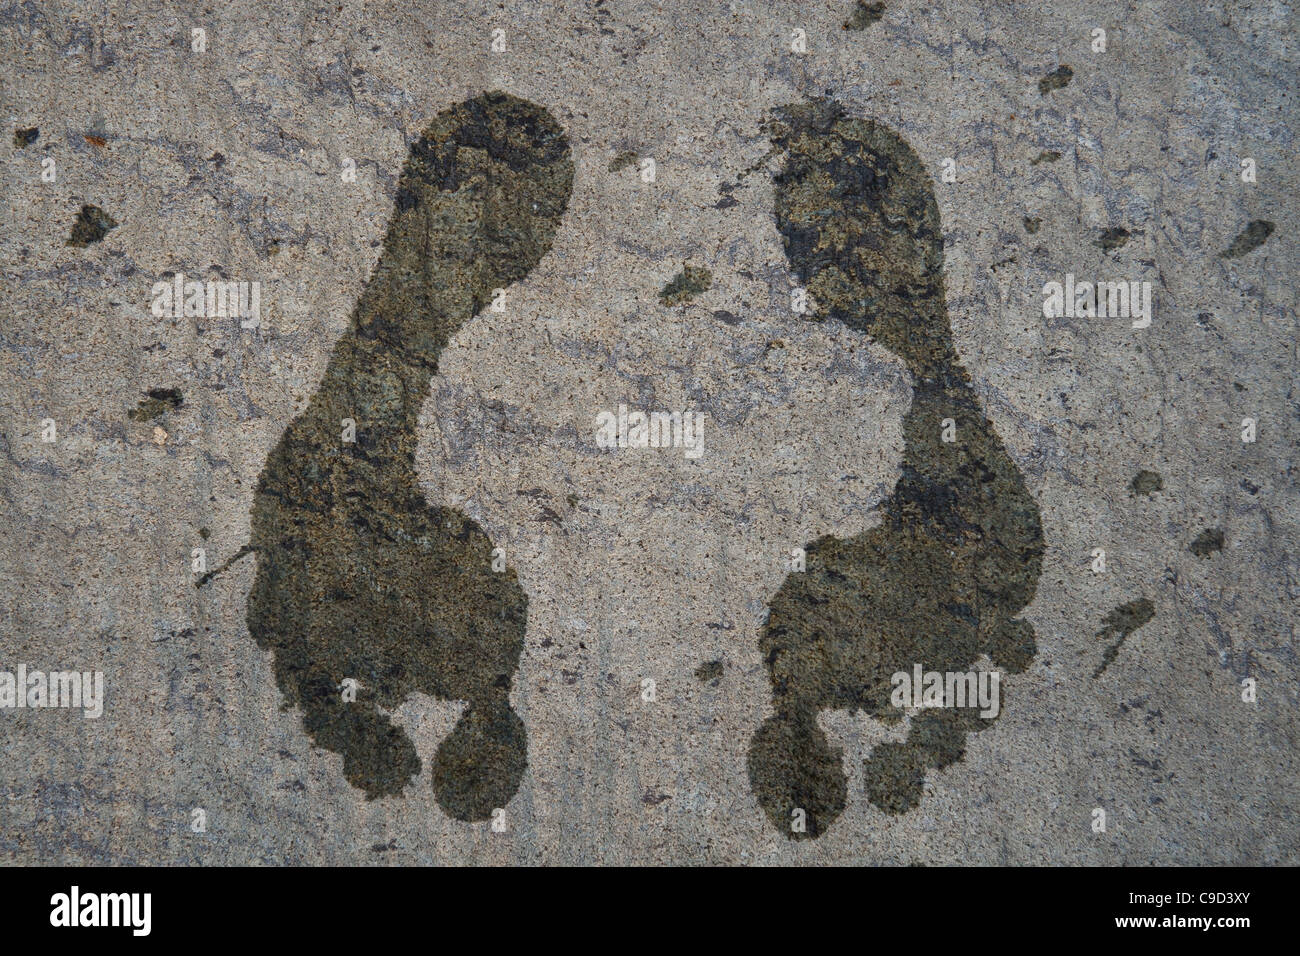 Wet footprint on a concrete pavement. Stock Photo